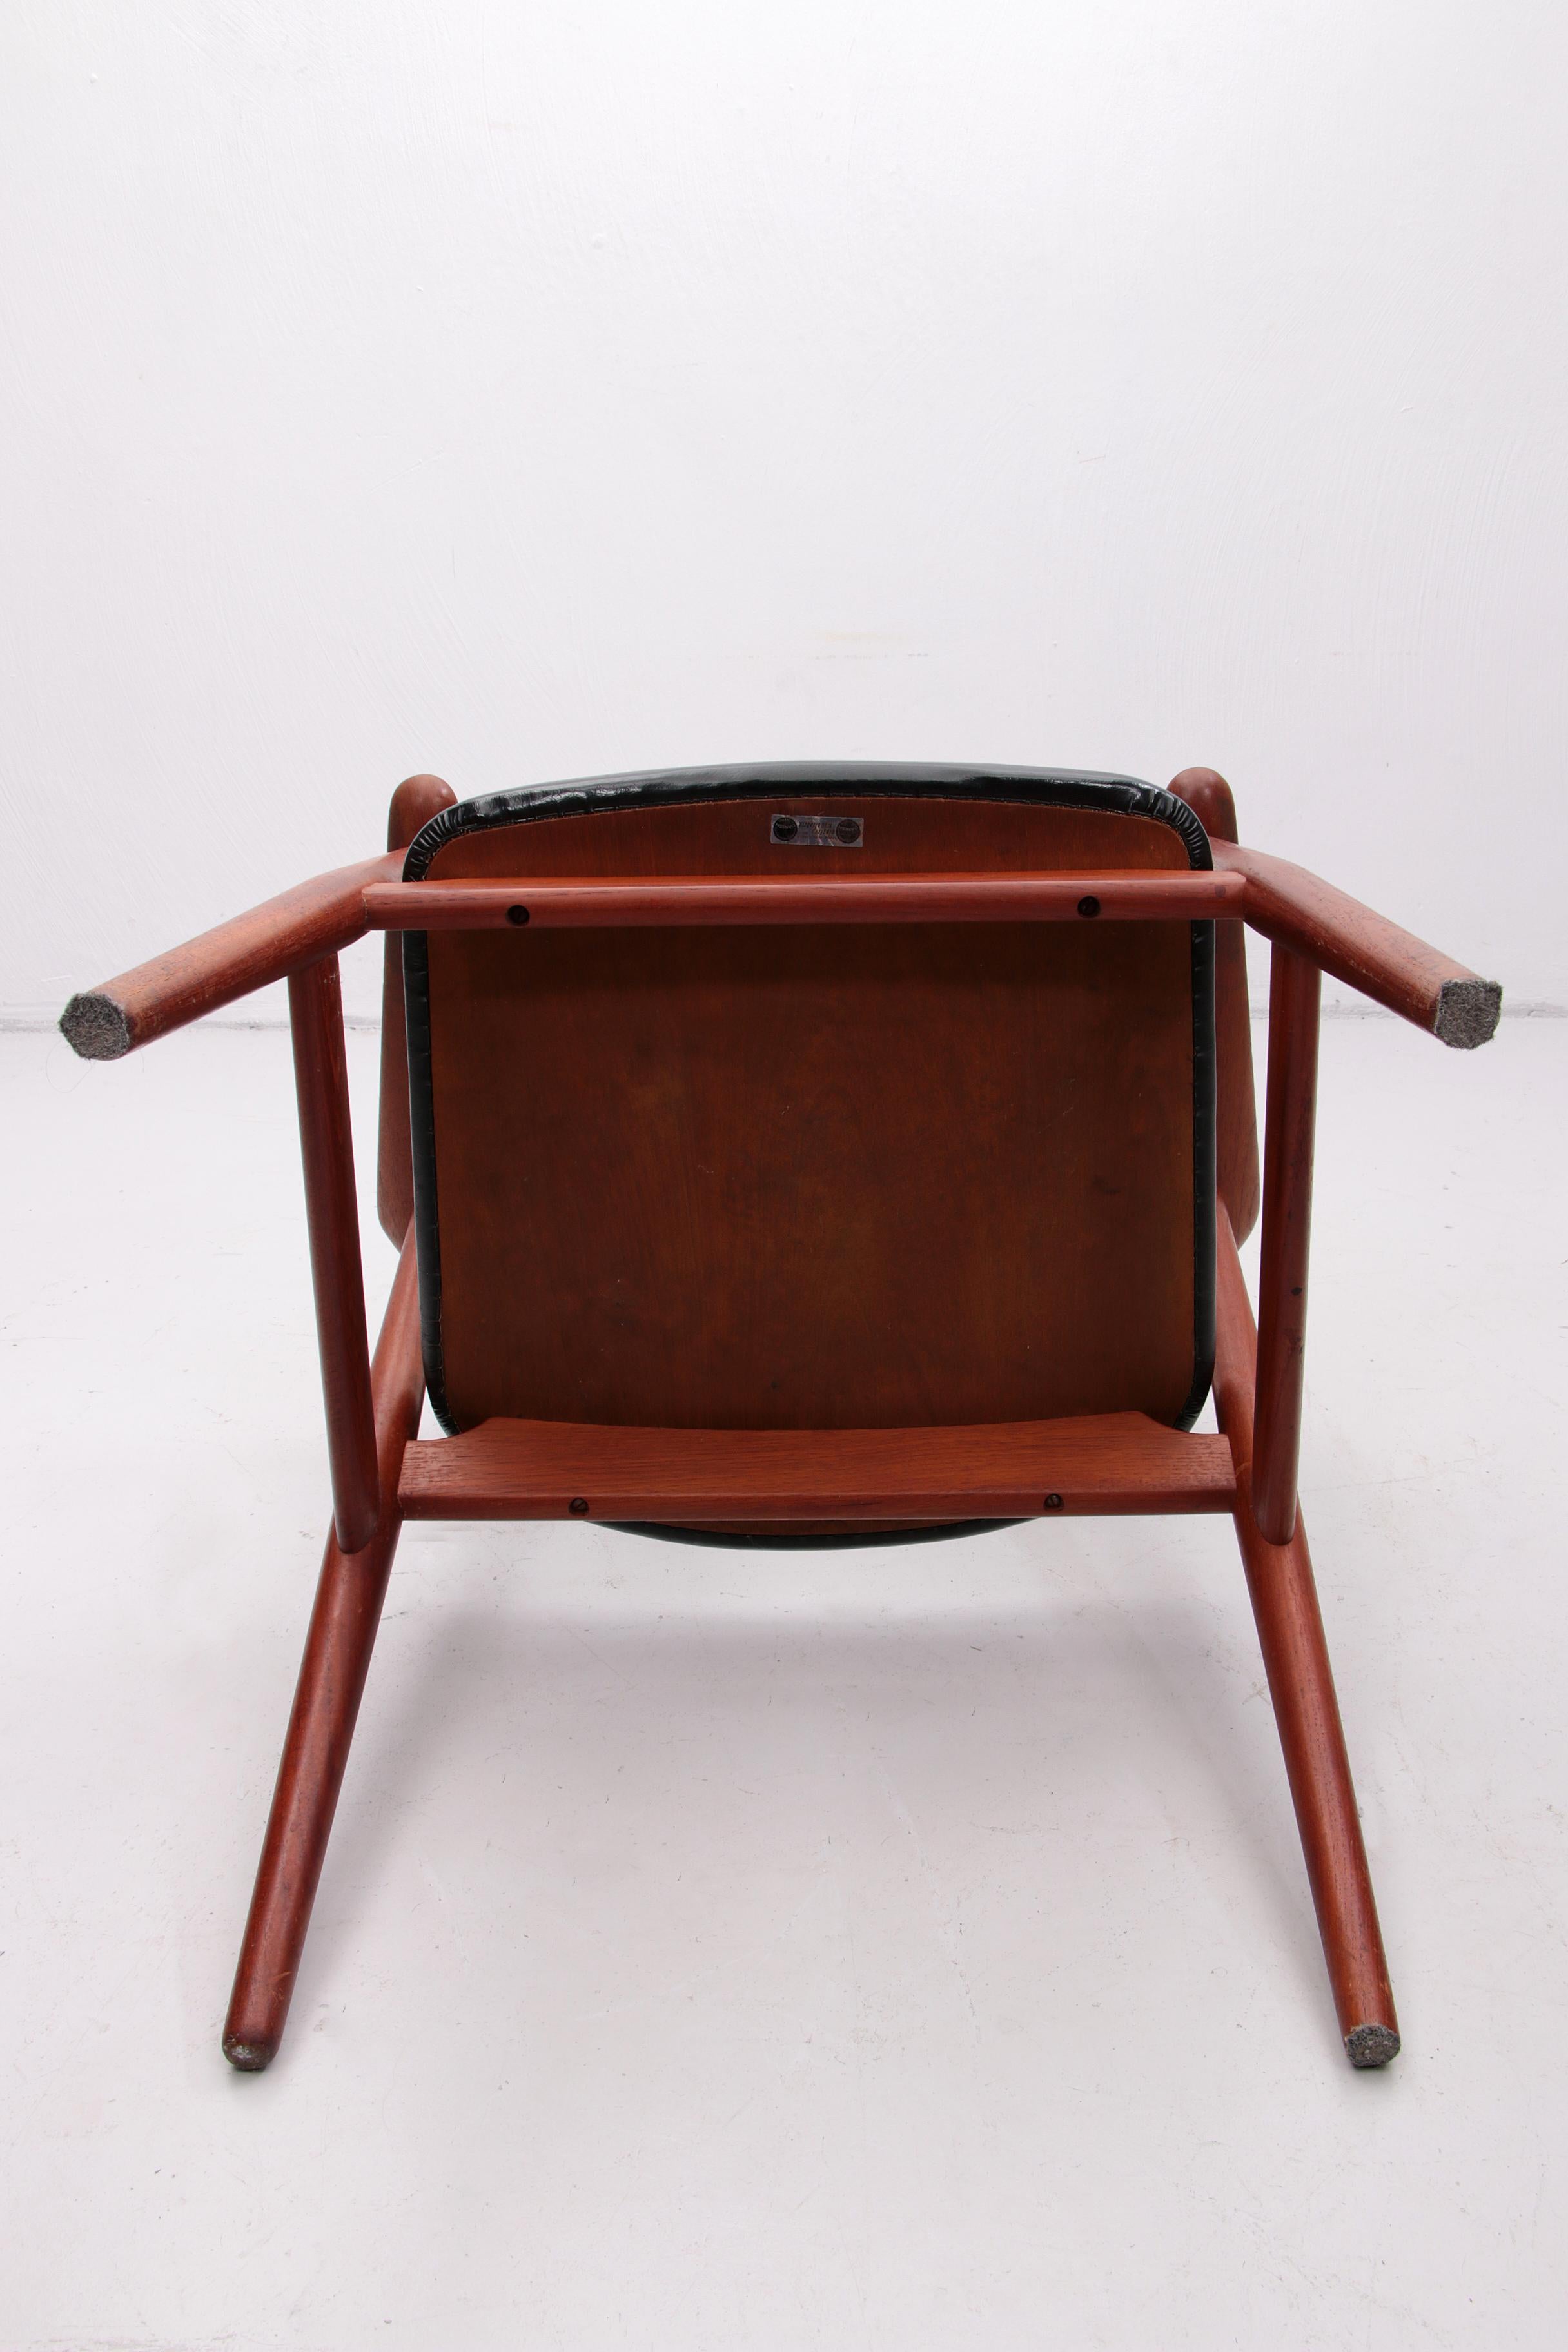 Svend Age Eriksen Dining Room Chair Model Gm11, 1960 For Sale 7